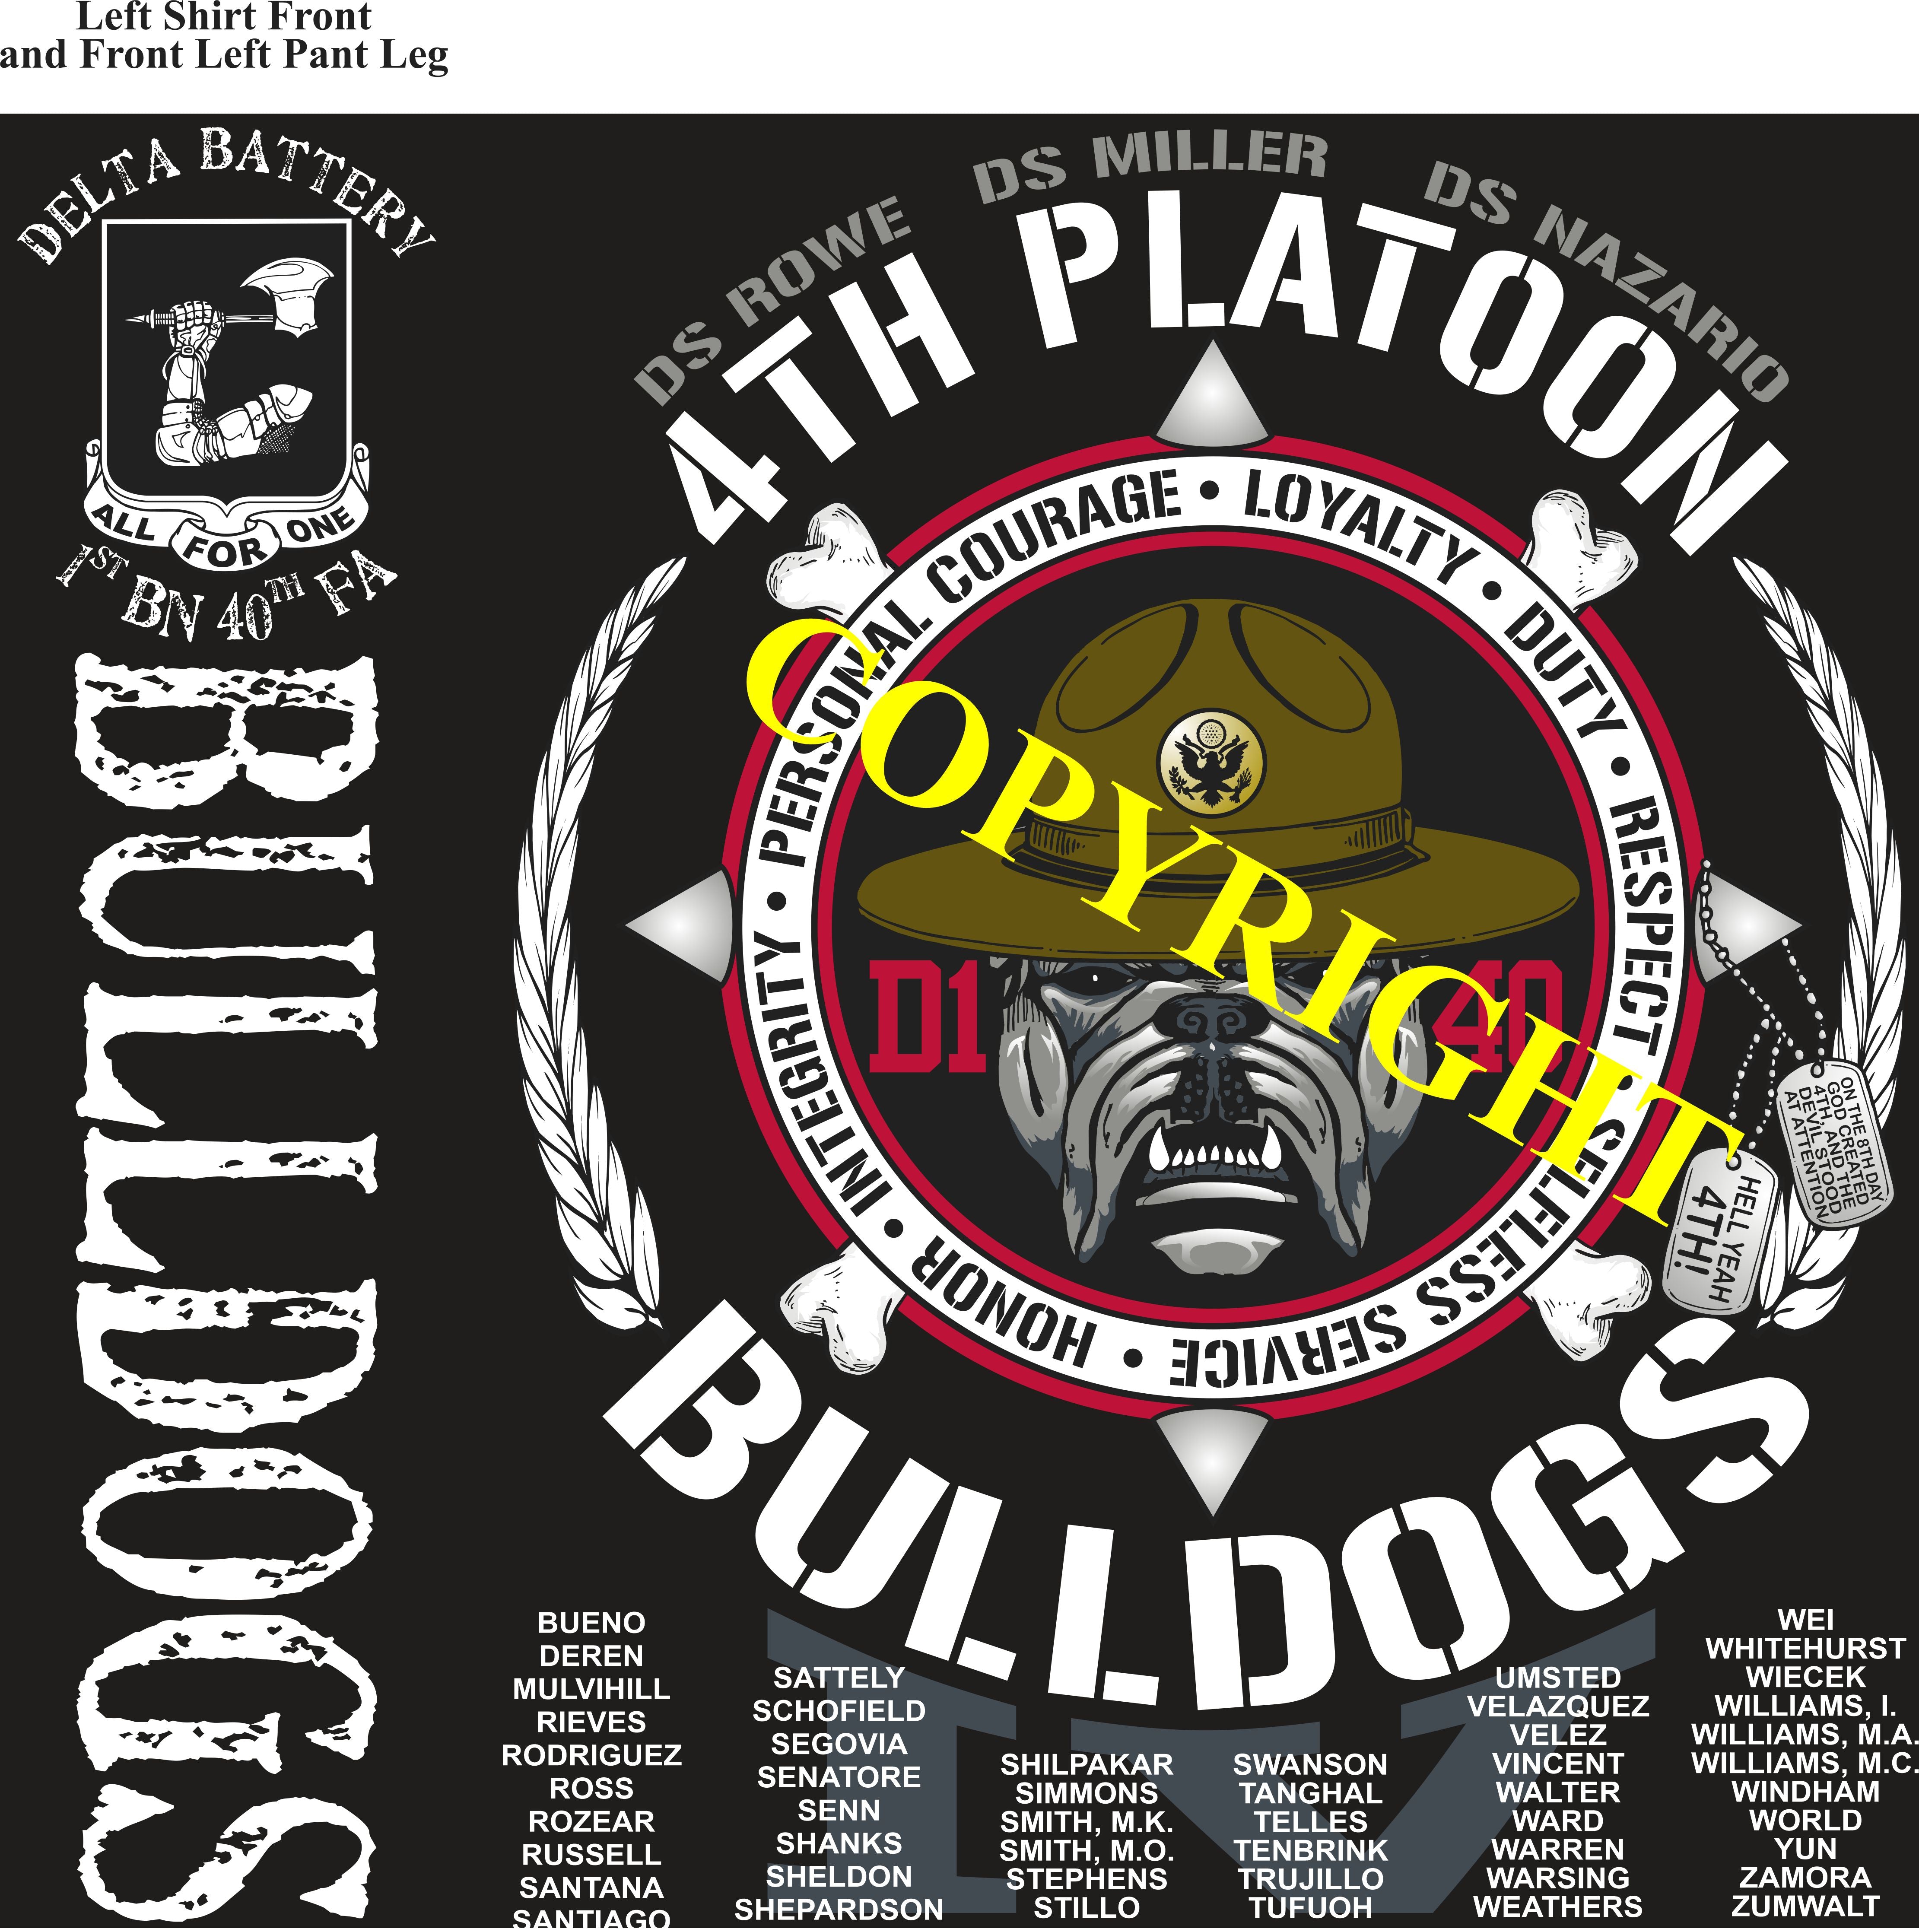 Platoon Shirts (2nd generation print) DELTA 1st 40th BULLDOGS FEB 2020